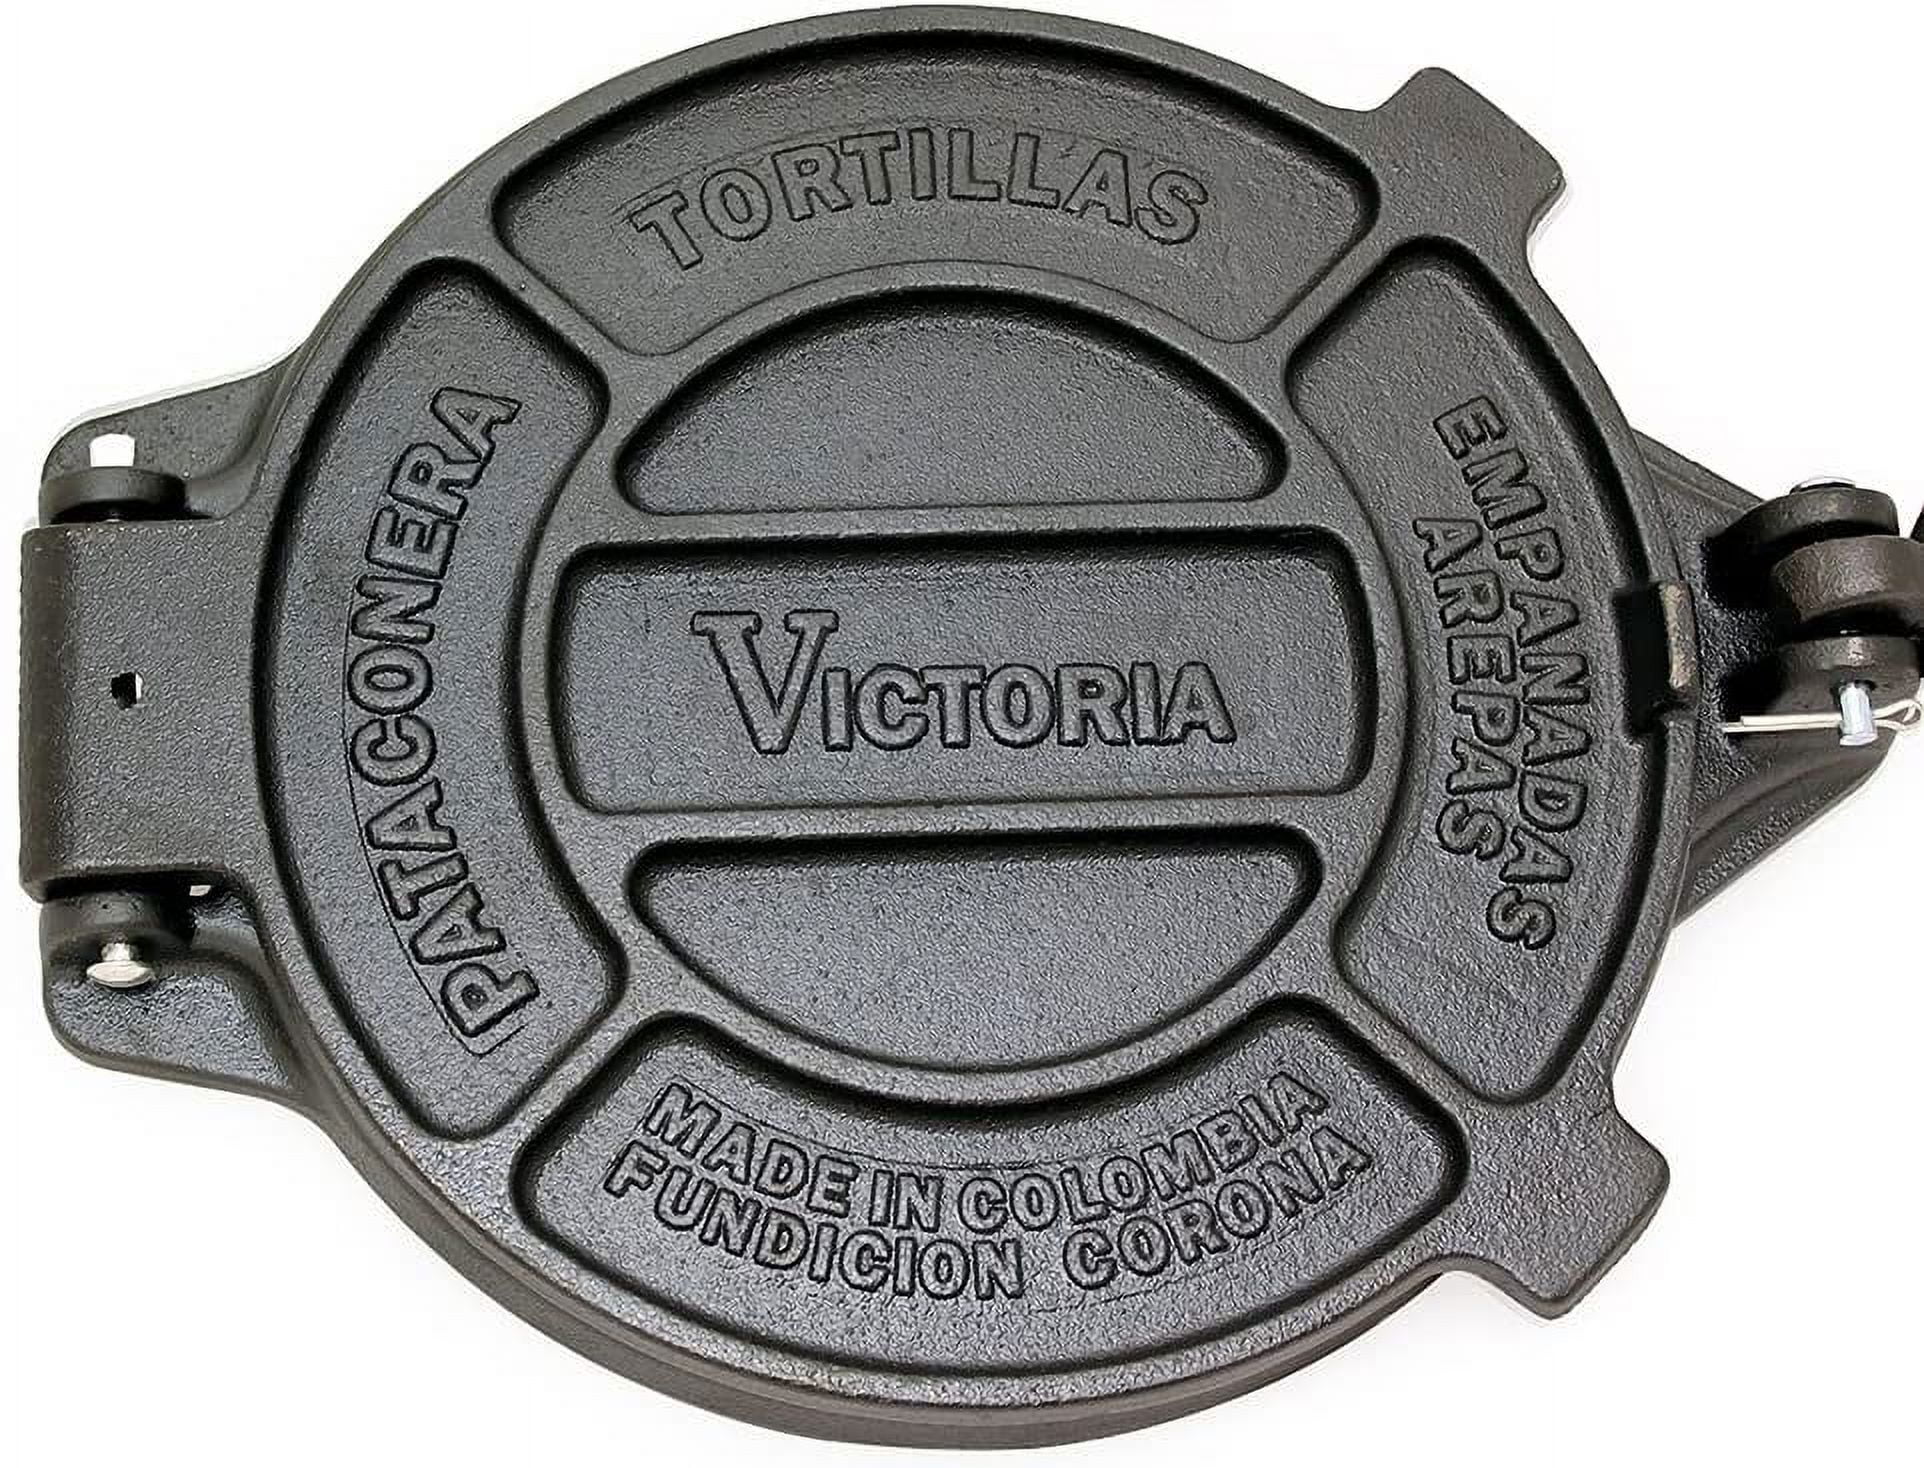 Victoria Tortilla Press 8 in Pataconera, HD Iron, Seasoned